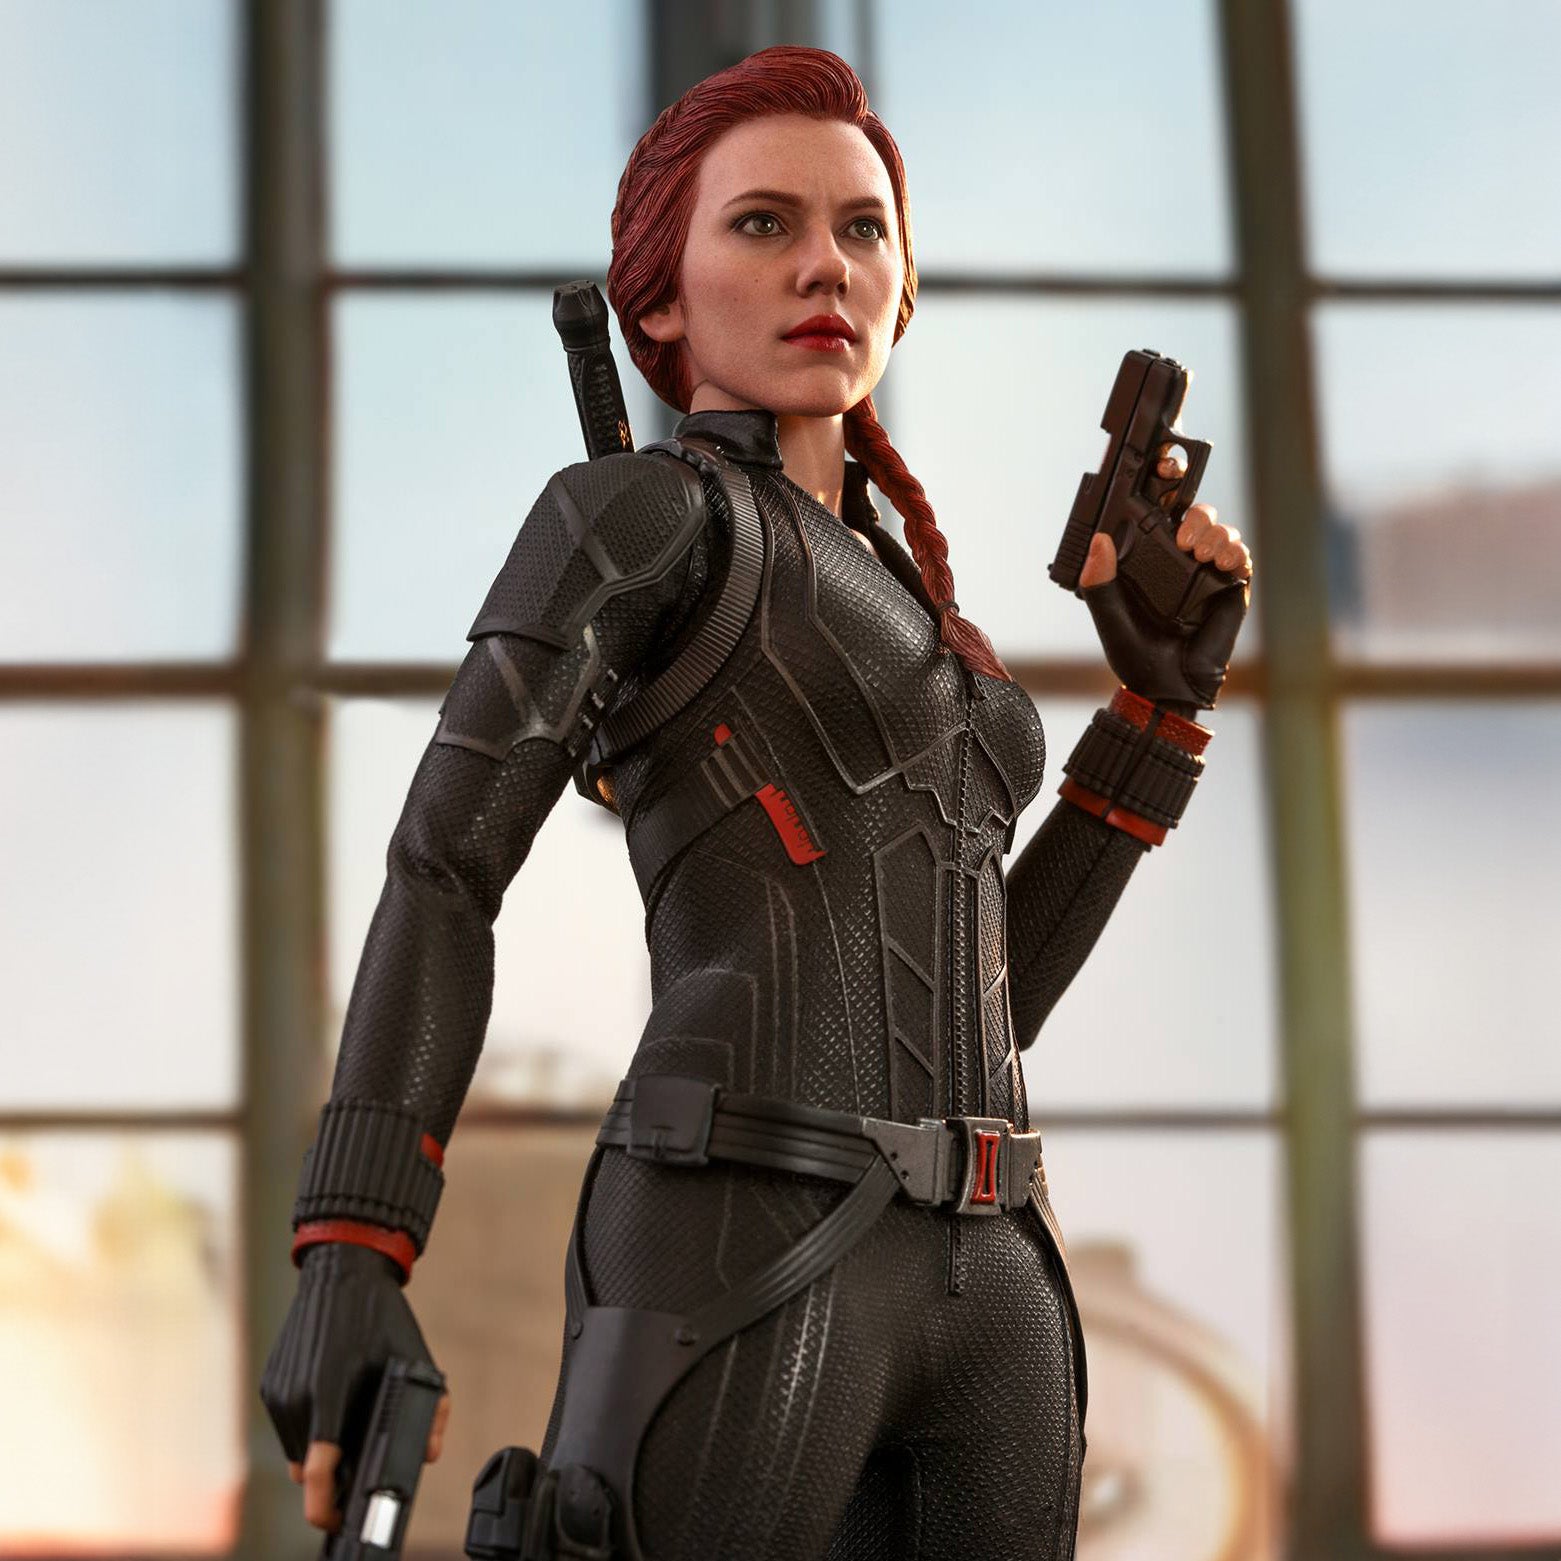 (IN STOCK) Hot Toys - MMS533 - Avengers: Endgame - Black Widow